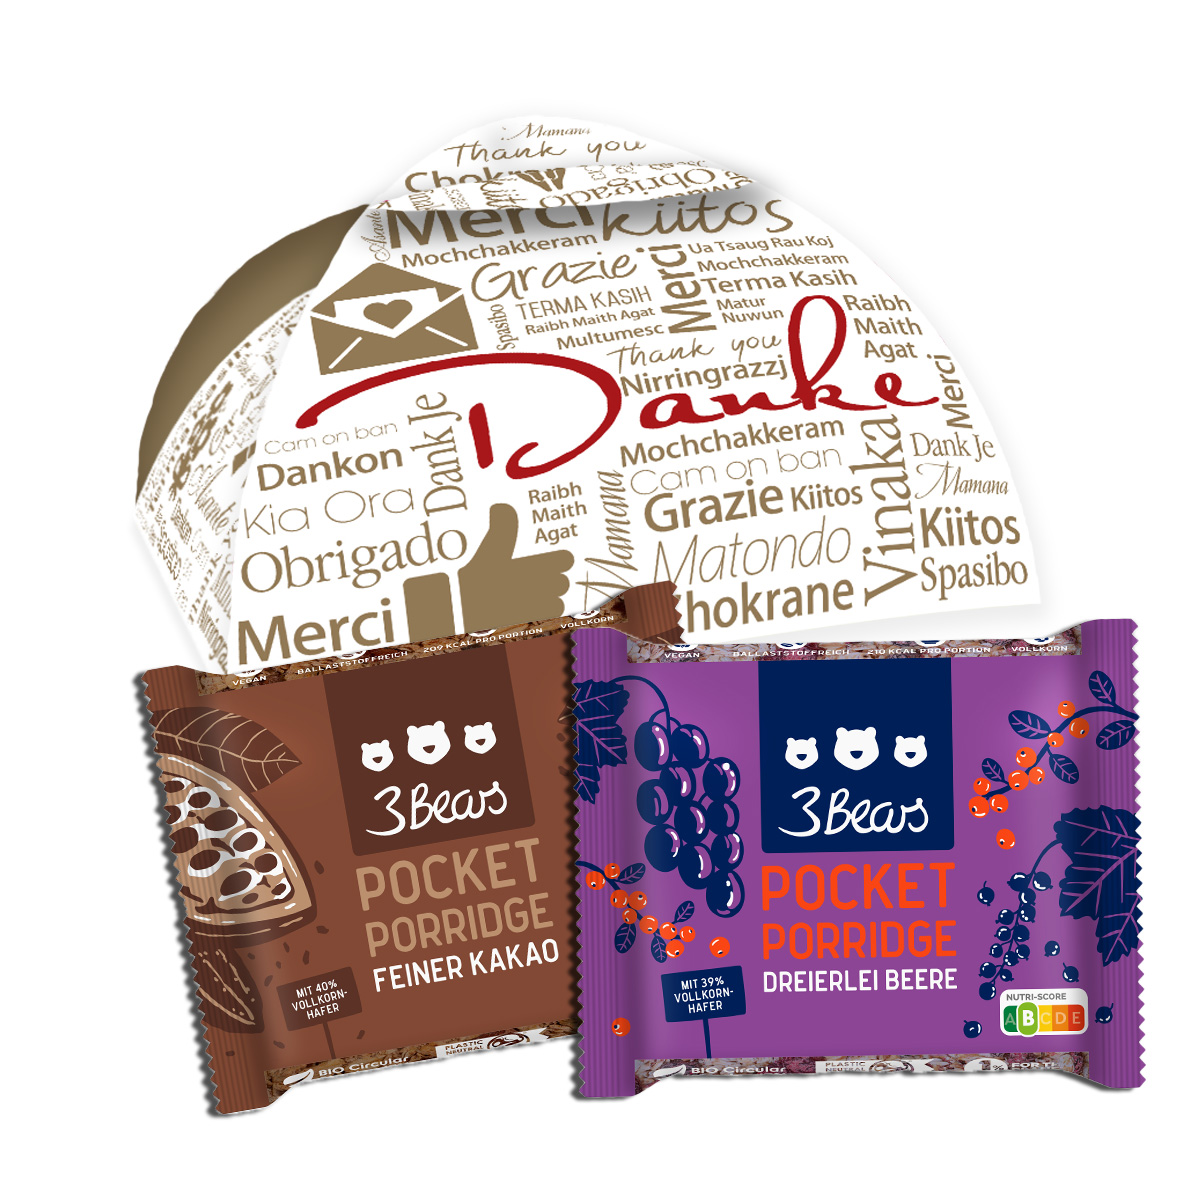 Geschenkpaket "Danke International" - Pocket Porridge title=